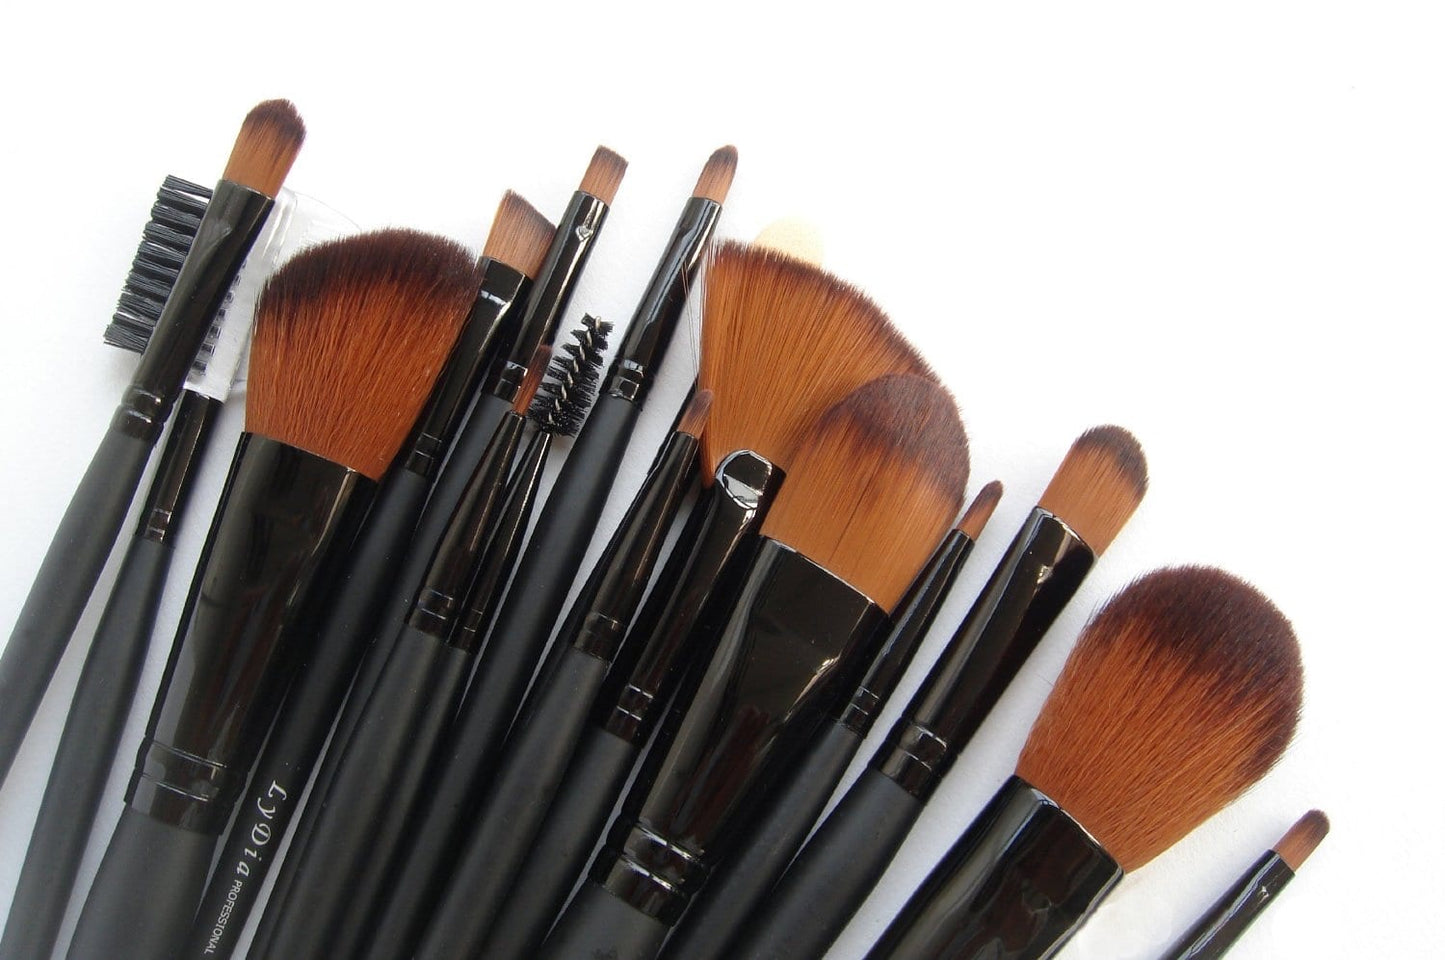 LyDia 16Pcs Black Makeup Brush Set With Case